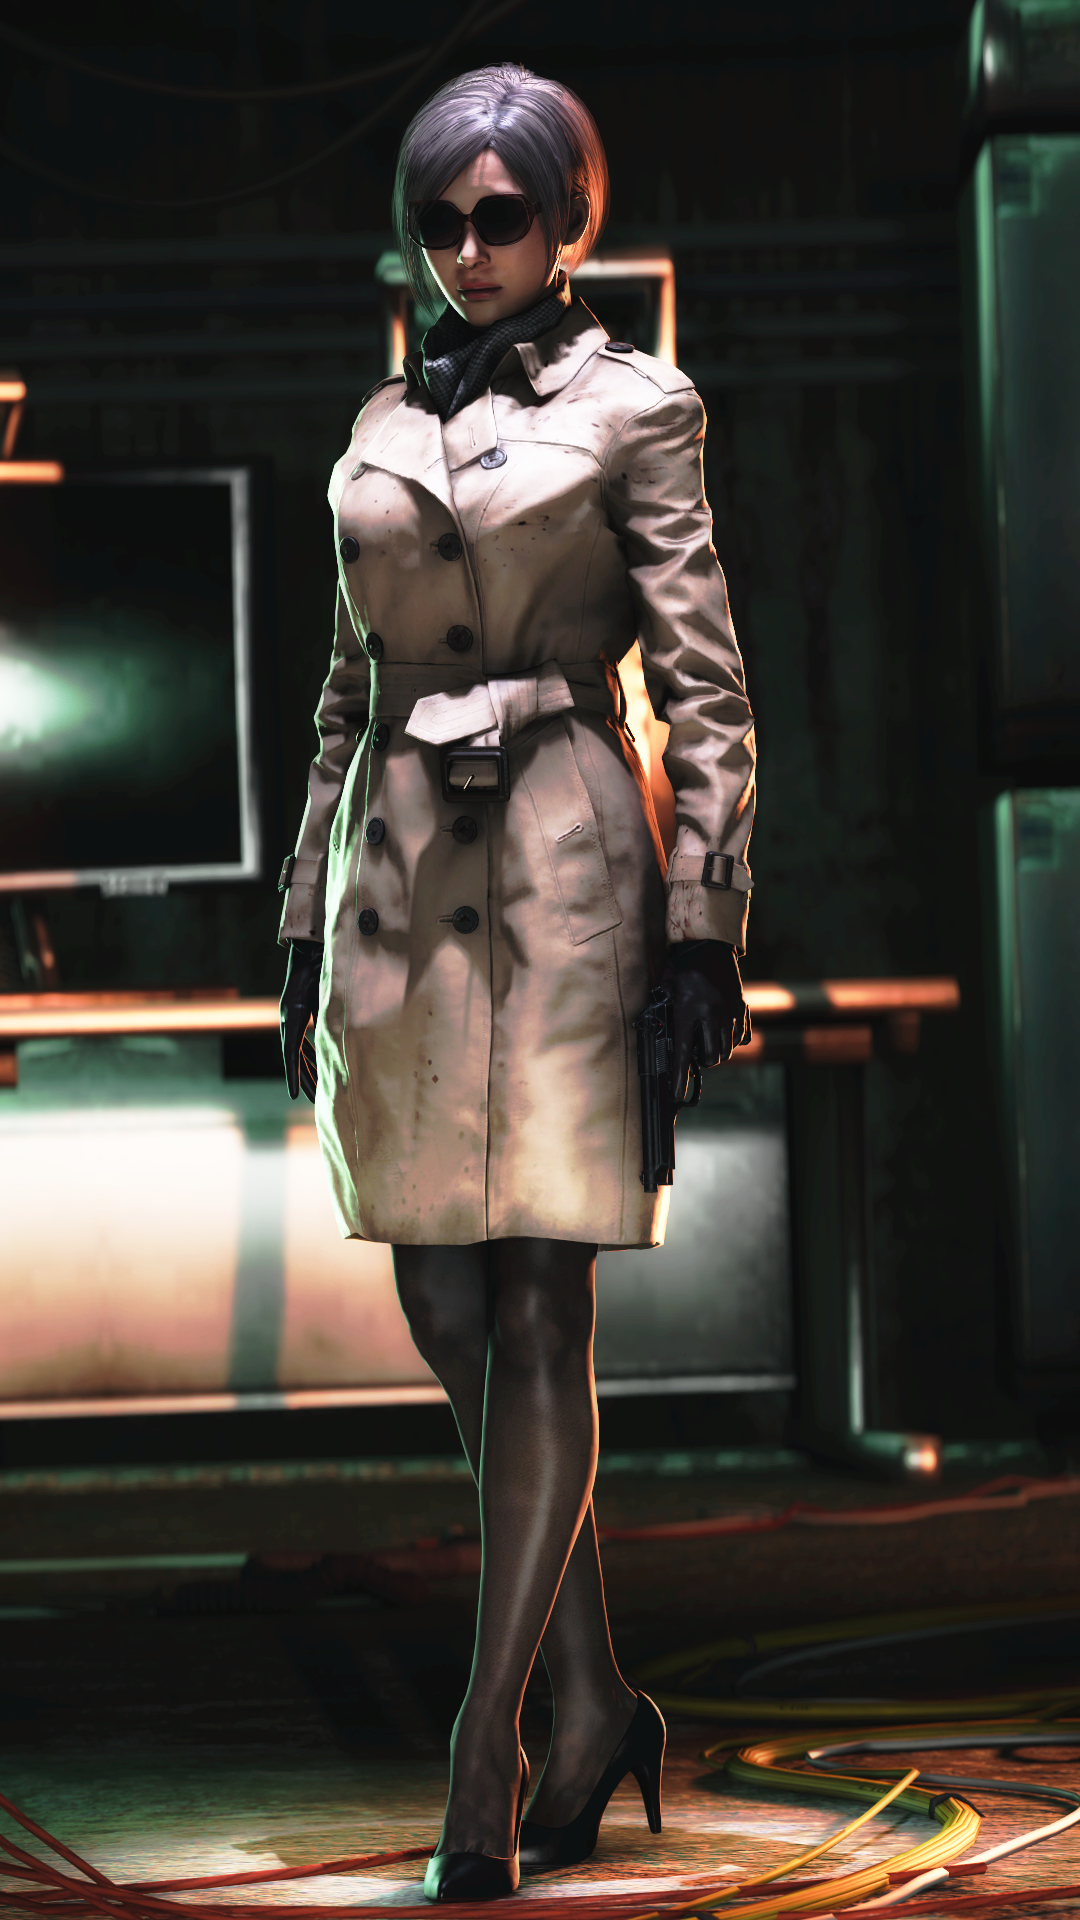 Resident Evil 2 - Ada Wong by vincyWP on DeviantArt